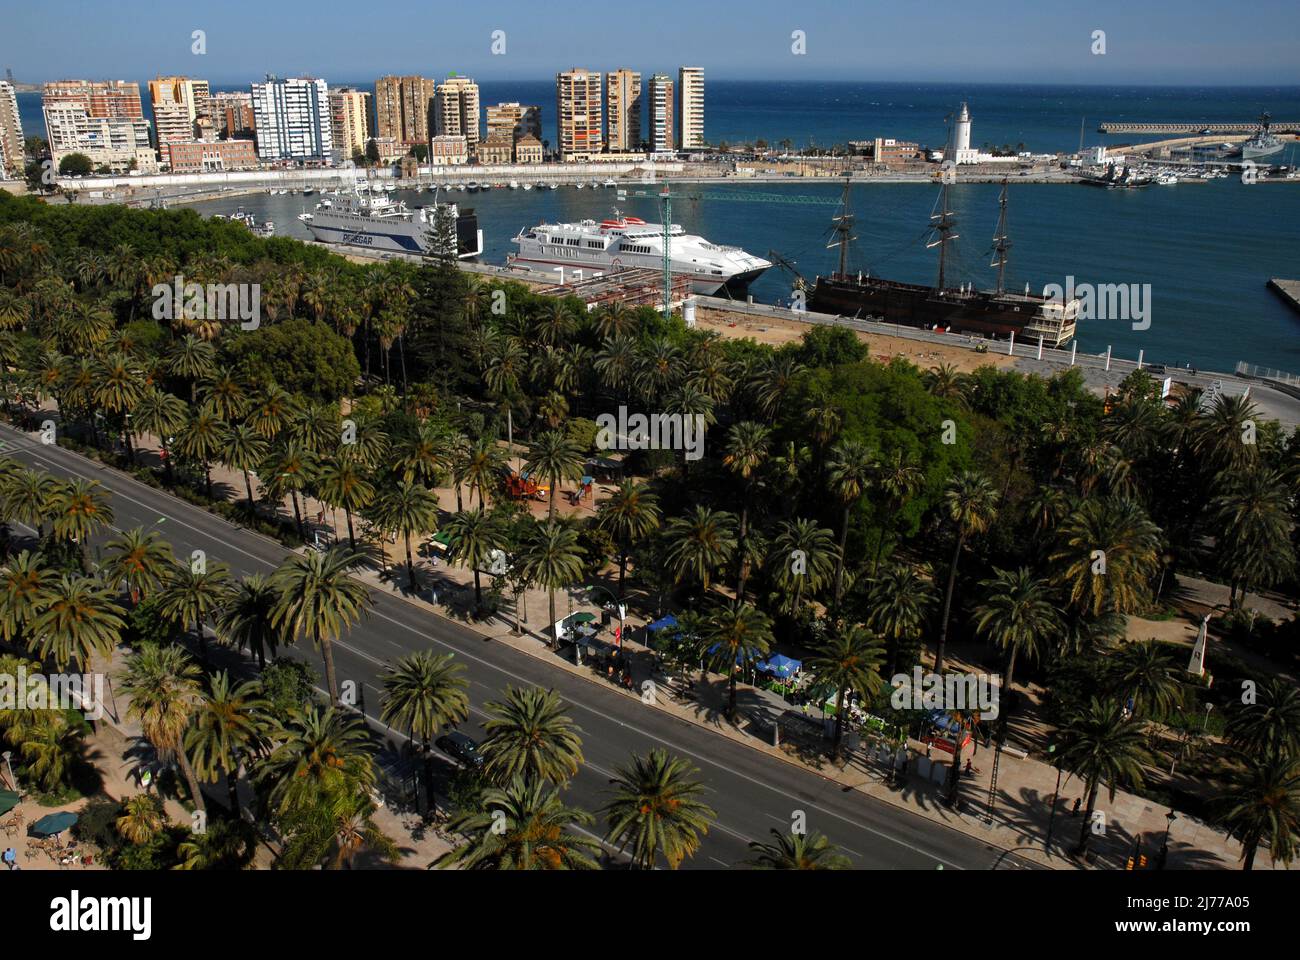 puerto mercante, Malaga foto: © Rosmi Duaso/fototext,BCN. Stockfoto